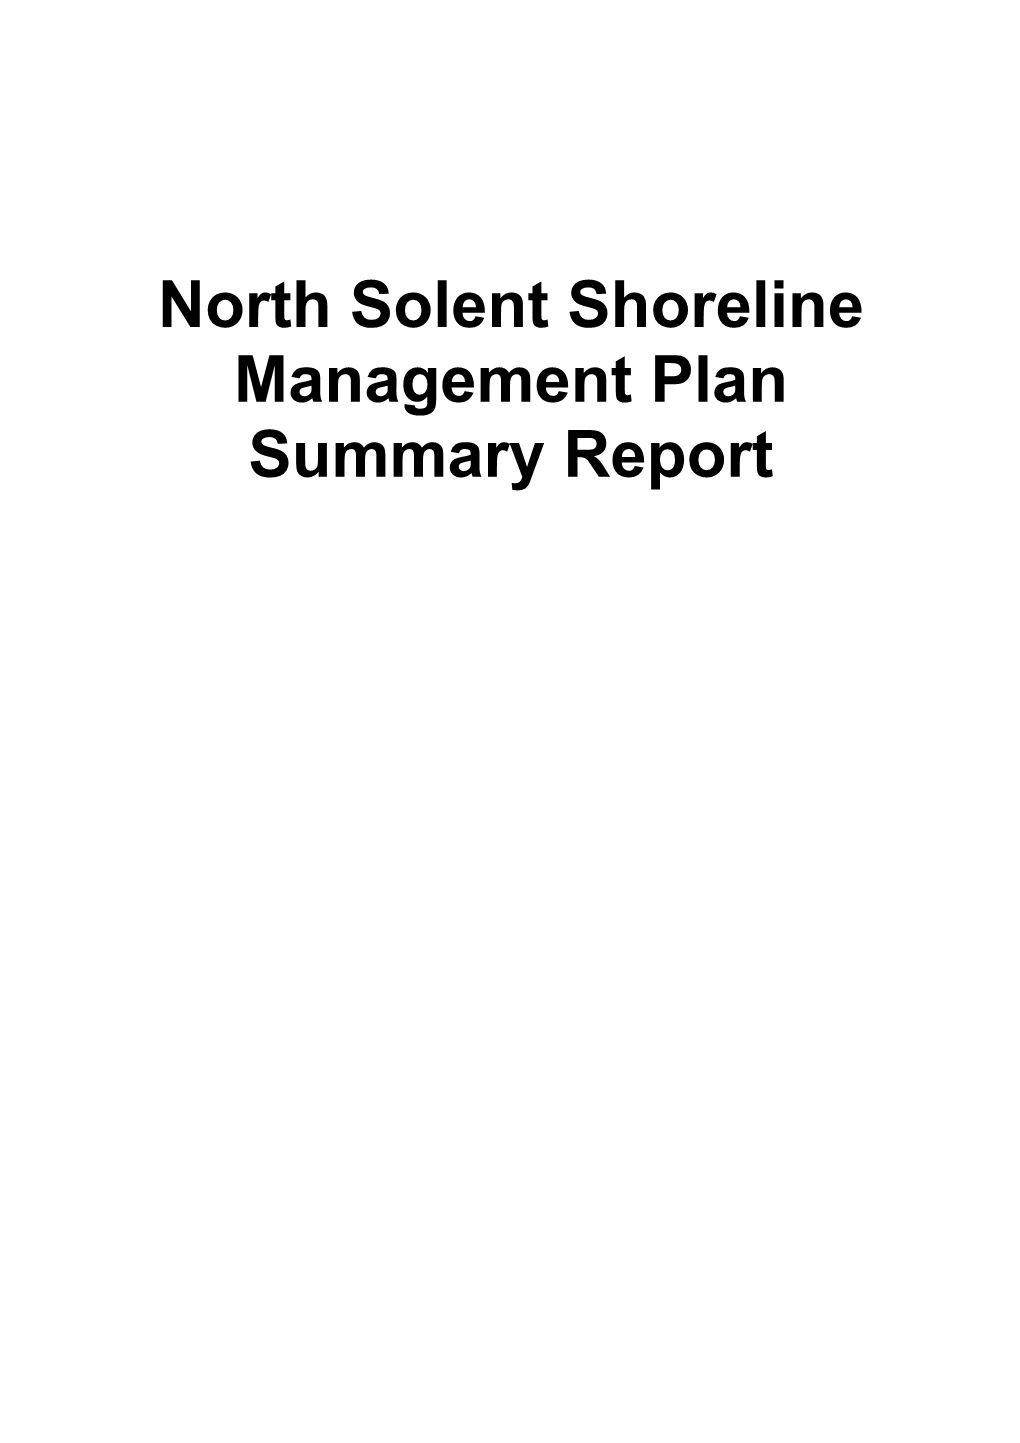 North Solent Shoreline Management Plan Summary Report